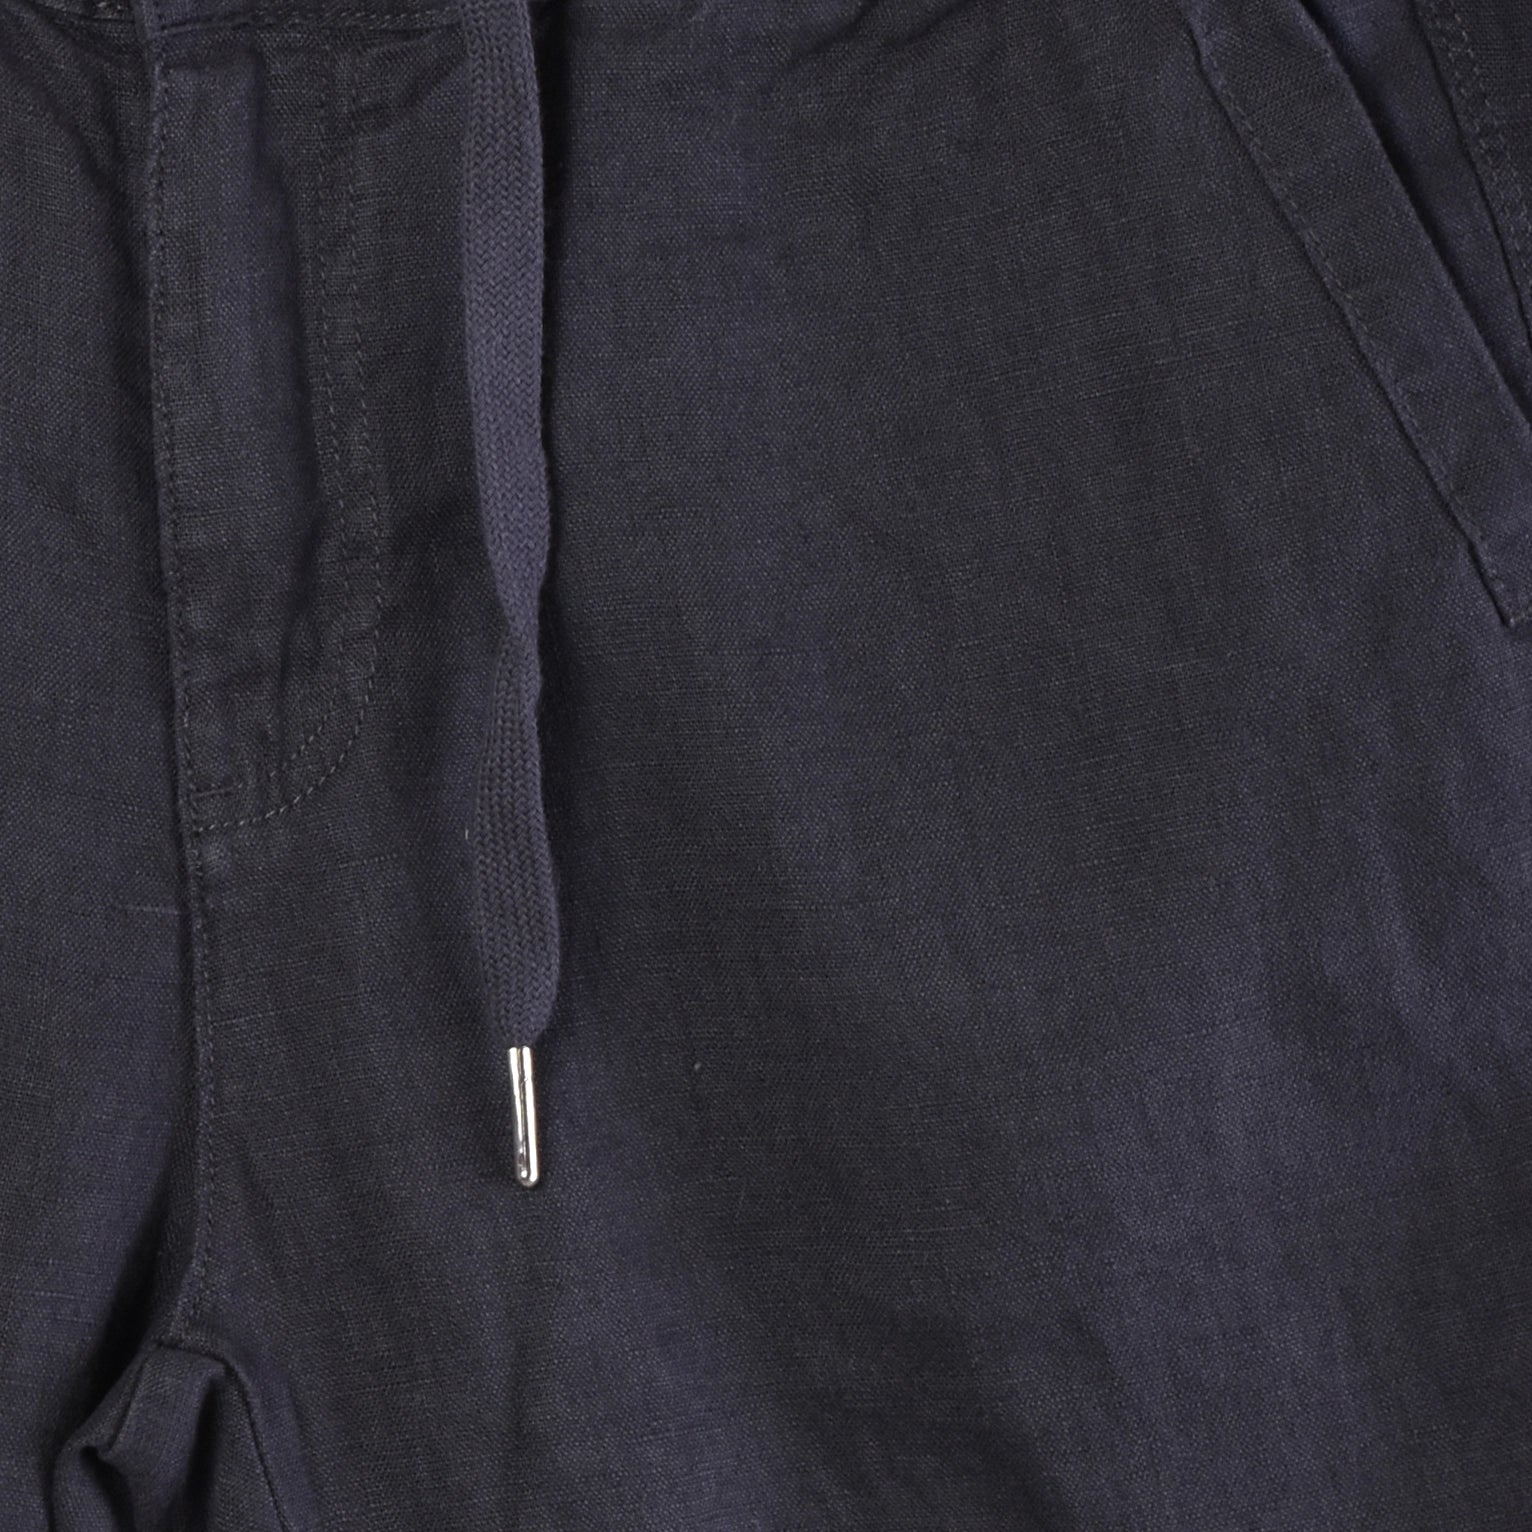 Bermuda Linen Shorts - Grey - Hugo Sthlm